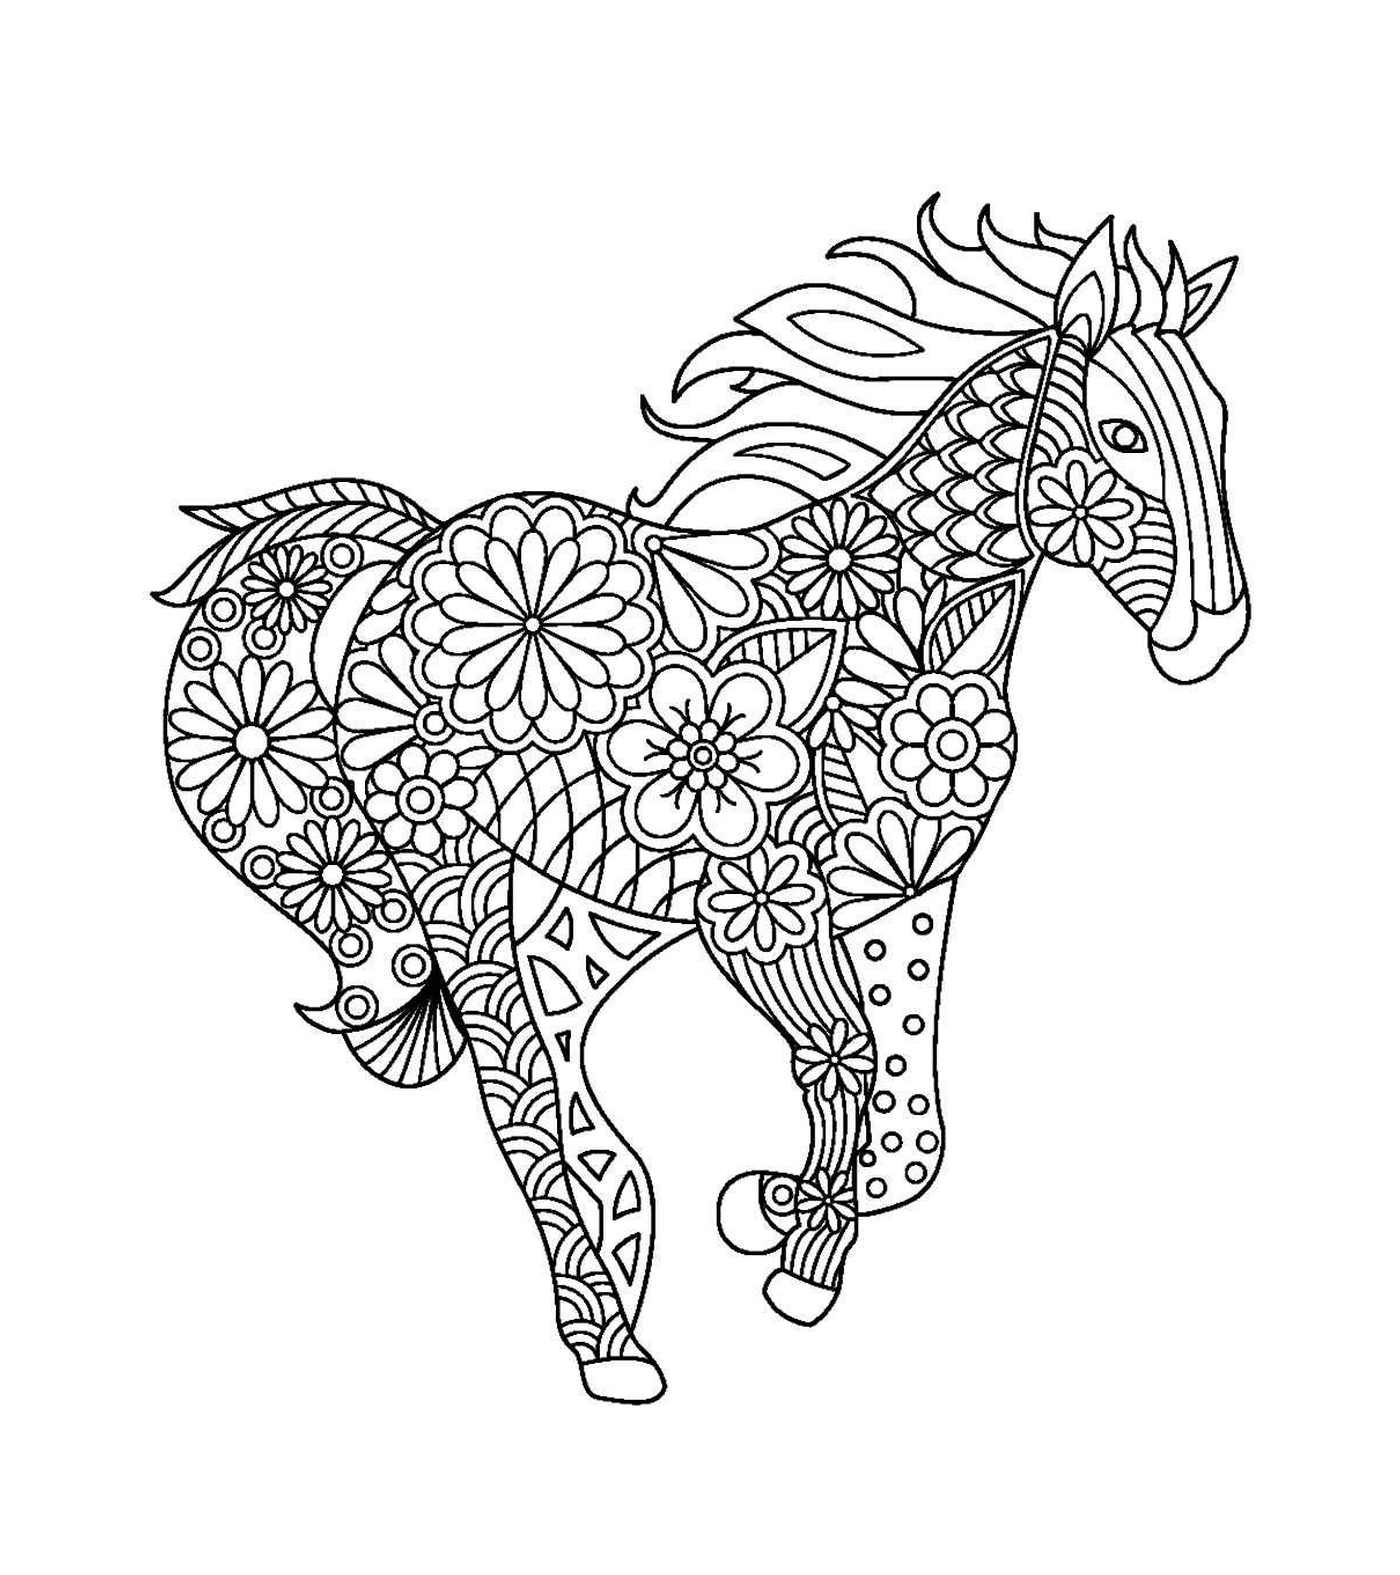  Un adulto de un caballo con diseños florales 